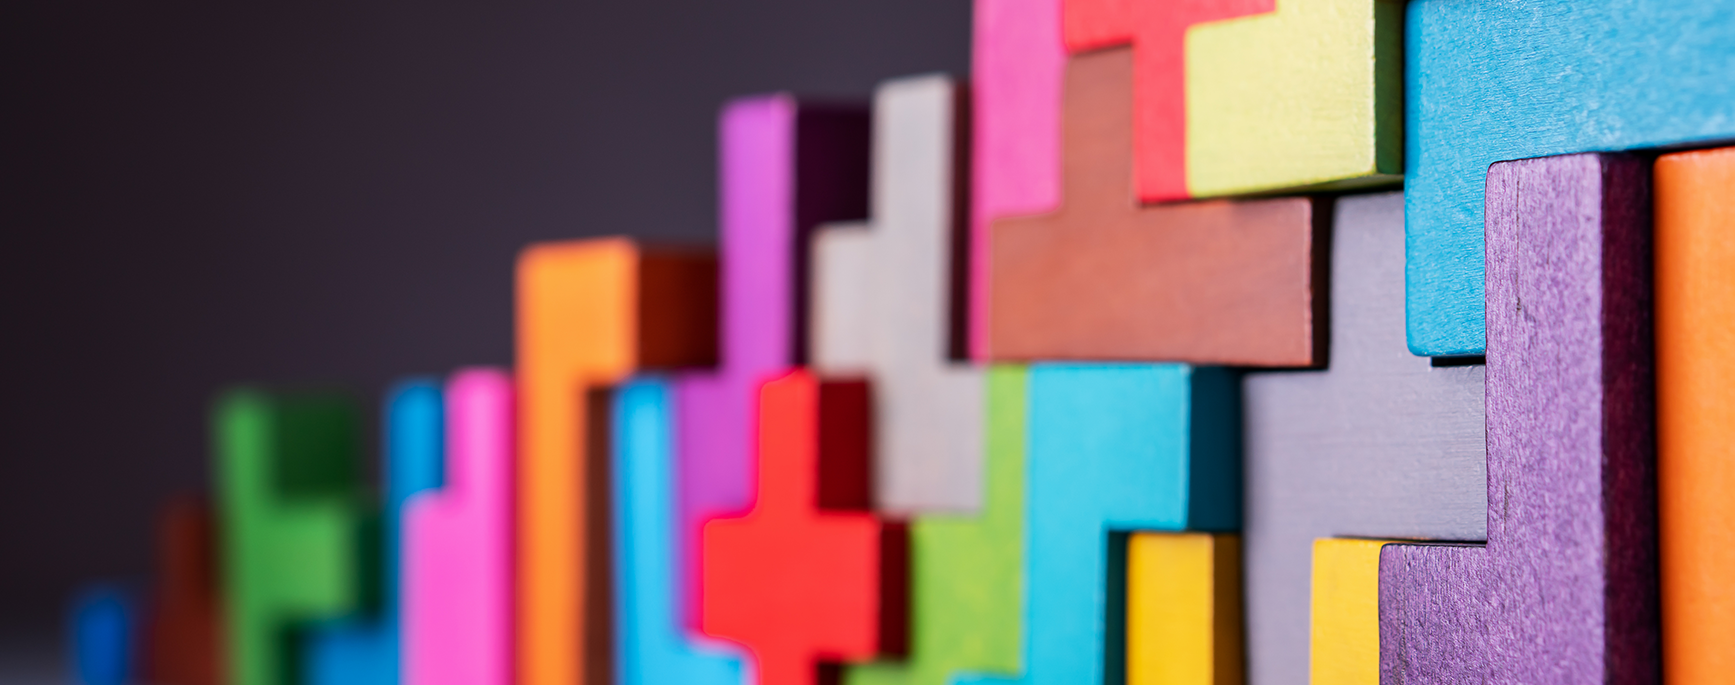 tetris style colored blocks